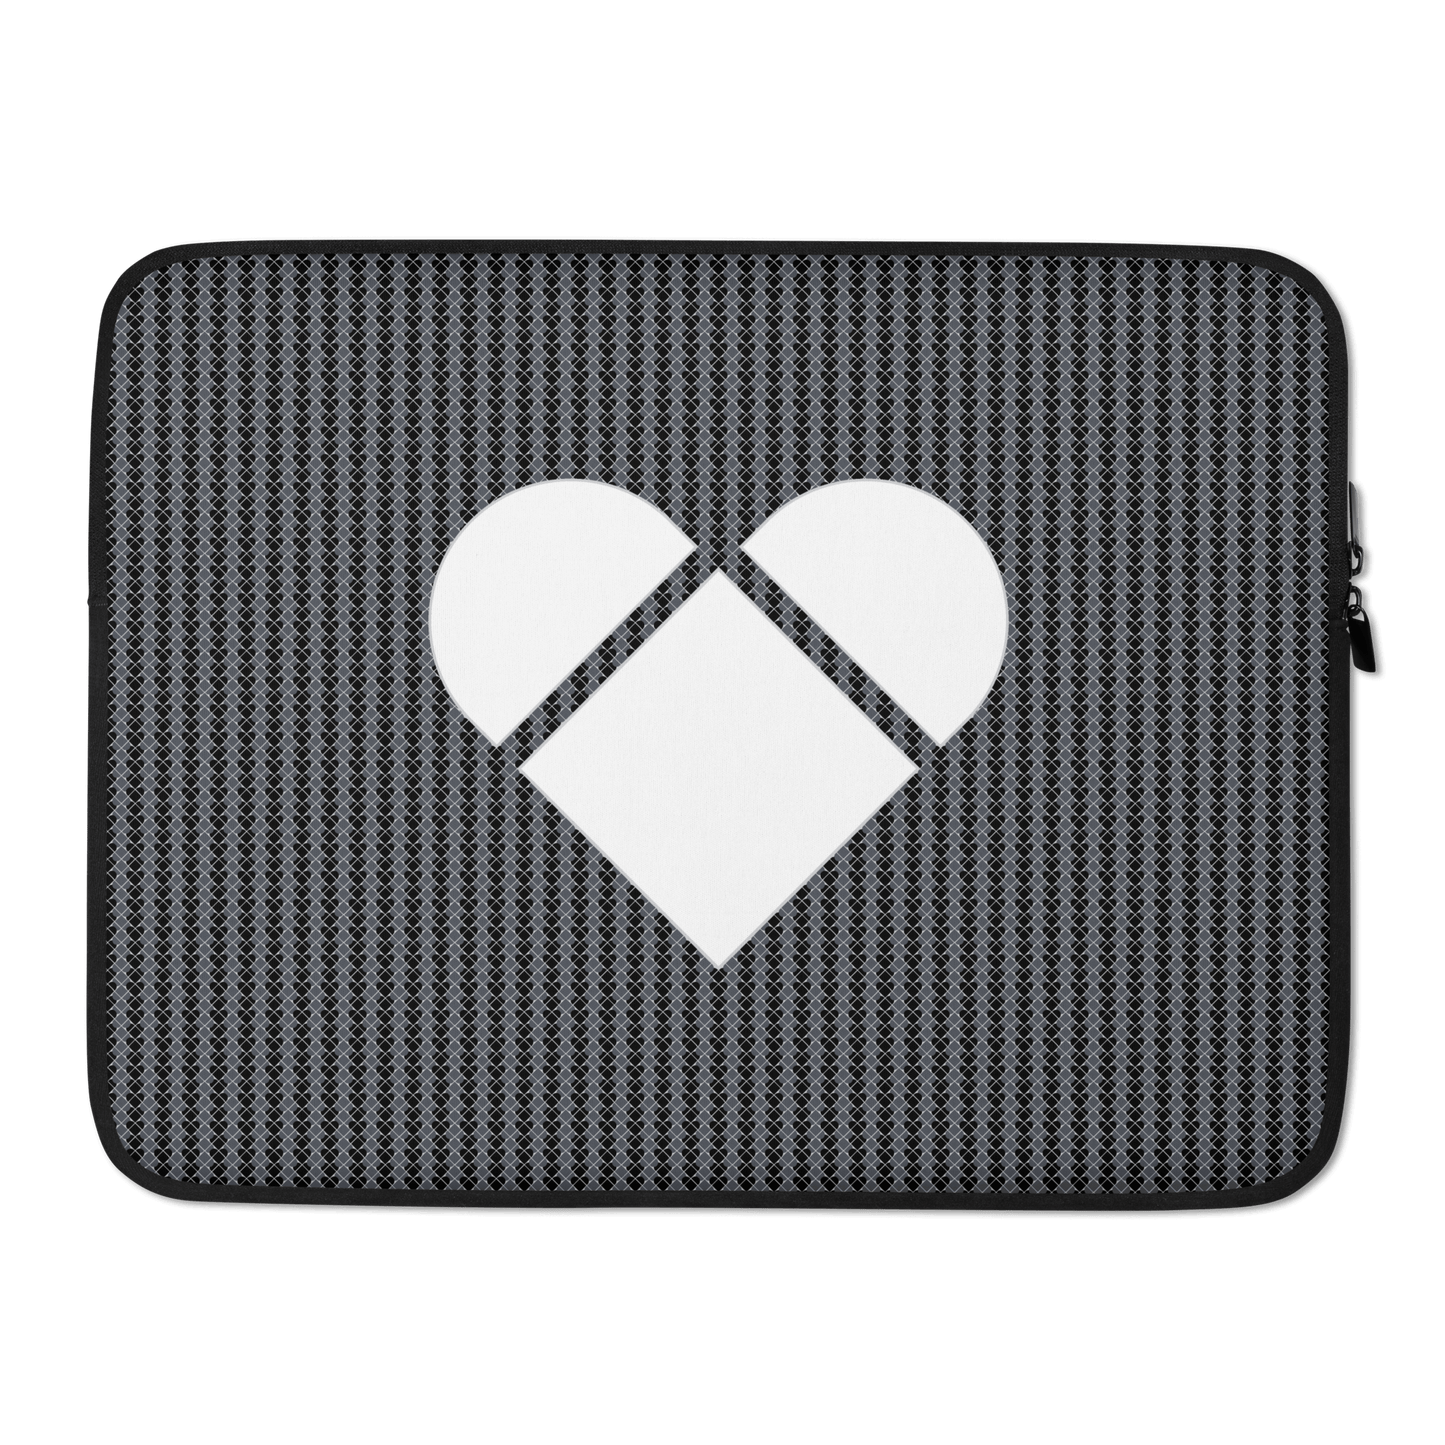 15 inch black Lovogram laptop sleeve from CRiZ AMOR's Amor Primero Capsule Collection